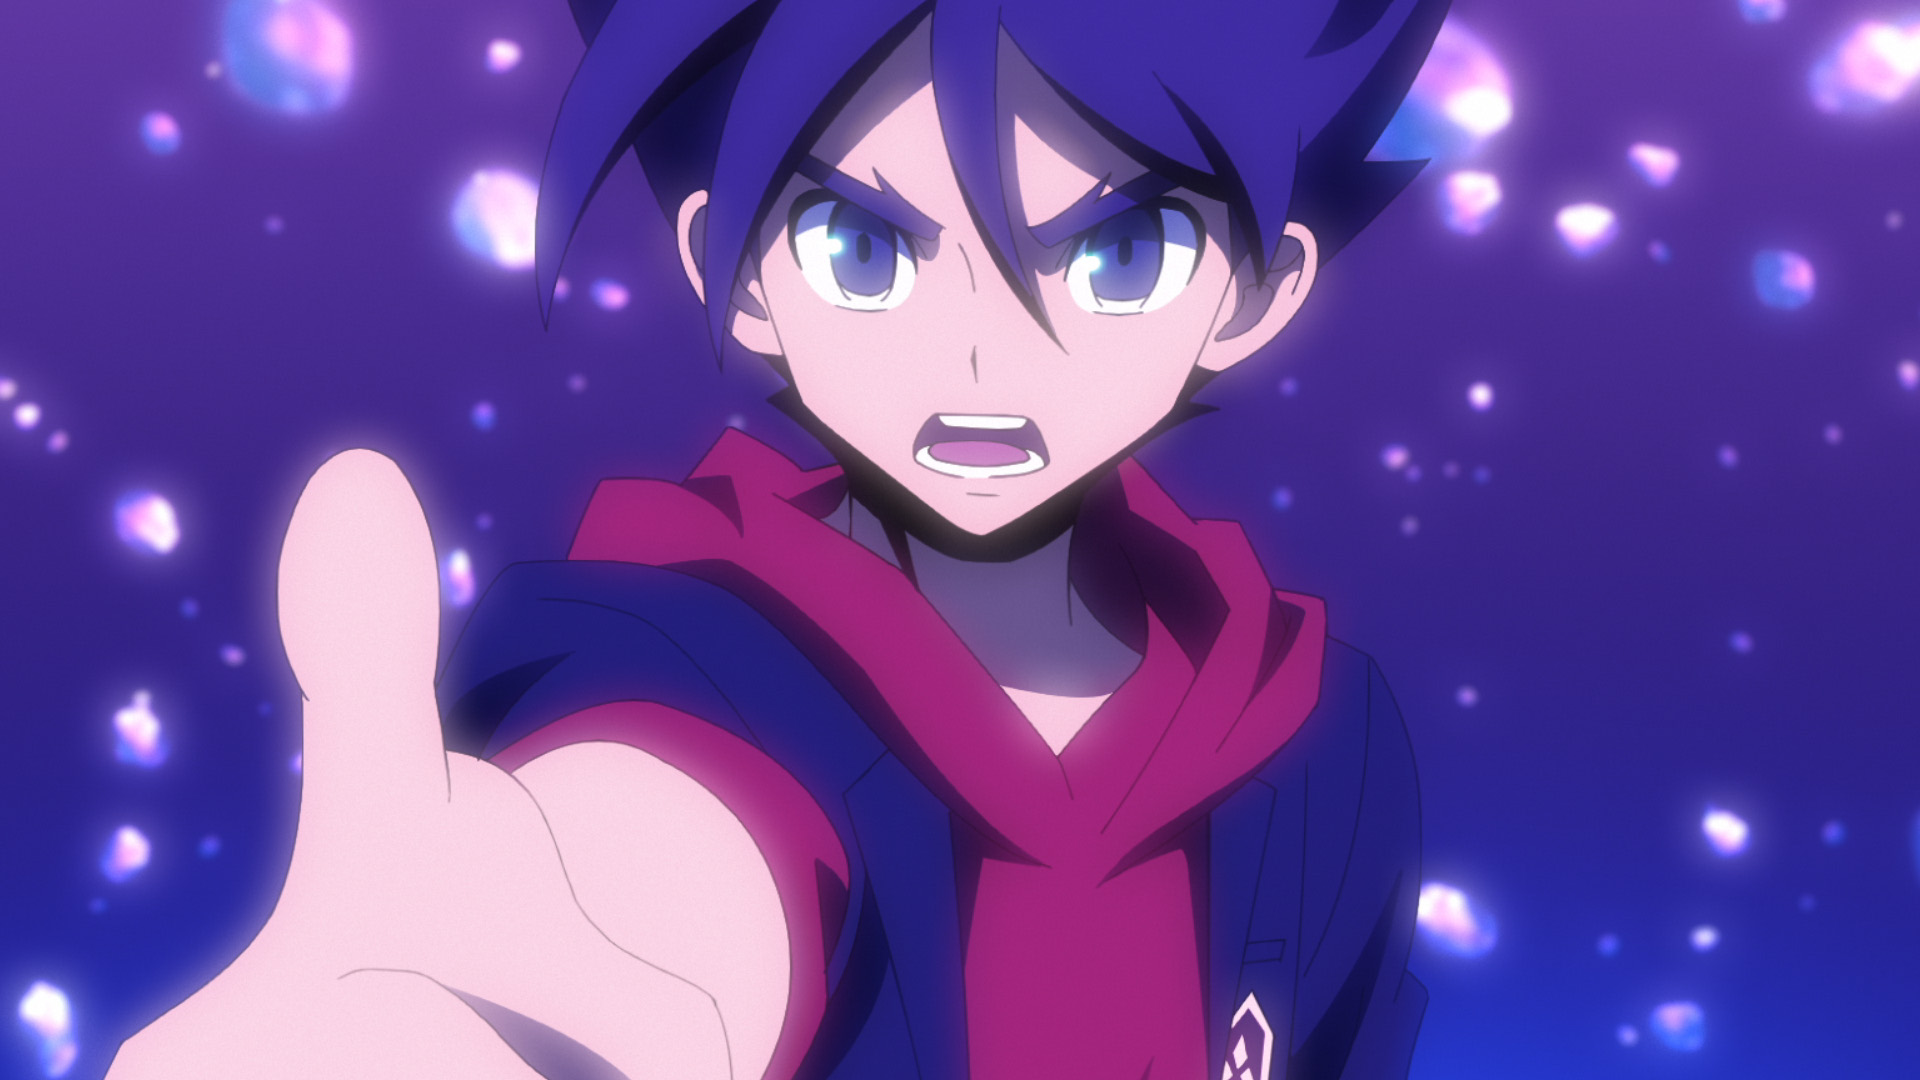 Crunchyroll - Megaton Musashi TV Anime Delays Episode 19 to Keep Up Quality